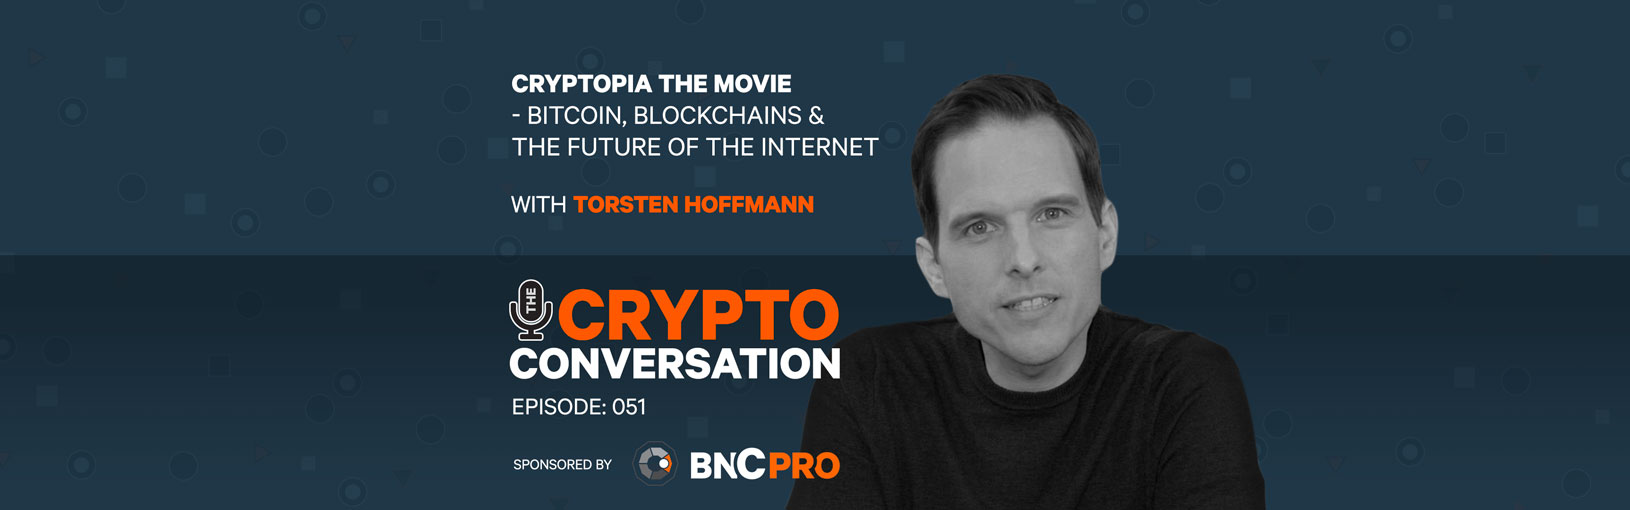 Cryptopia the movie – Bitcoin, Blockchains & the Future of the Internet